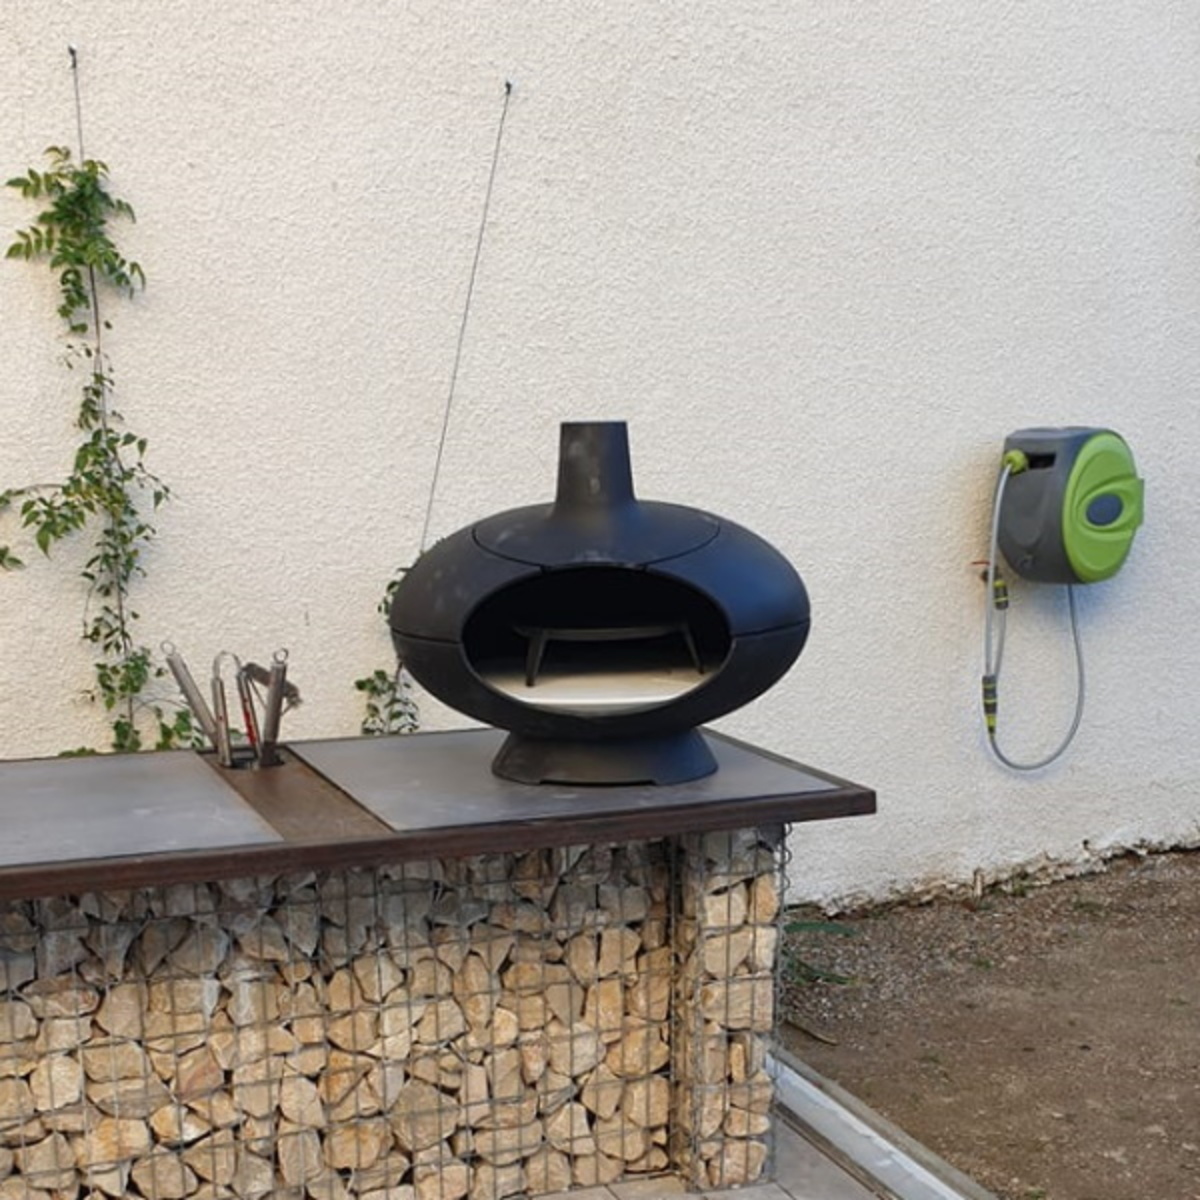 Morso Forno Outdoor wood fired pizza oven (Merci Patricia!)